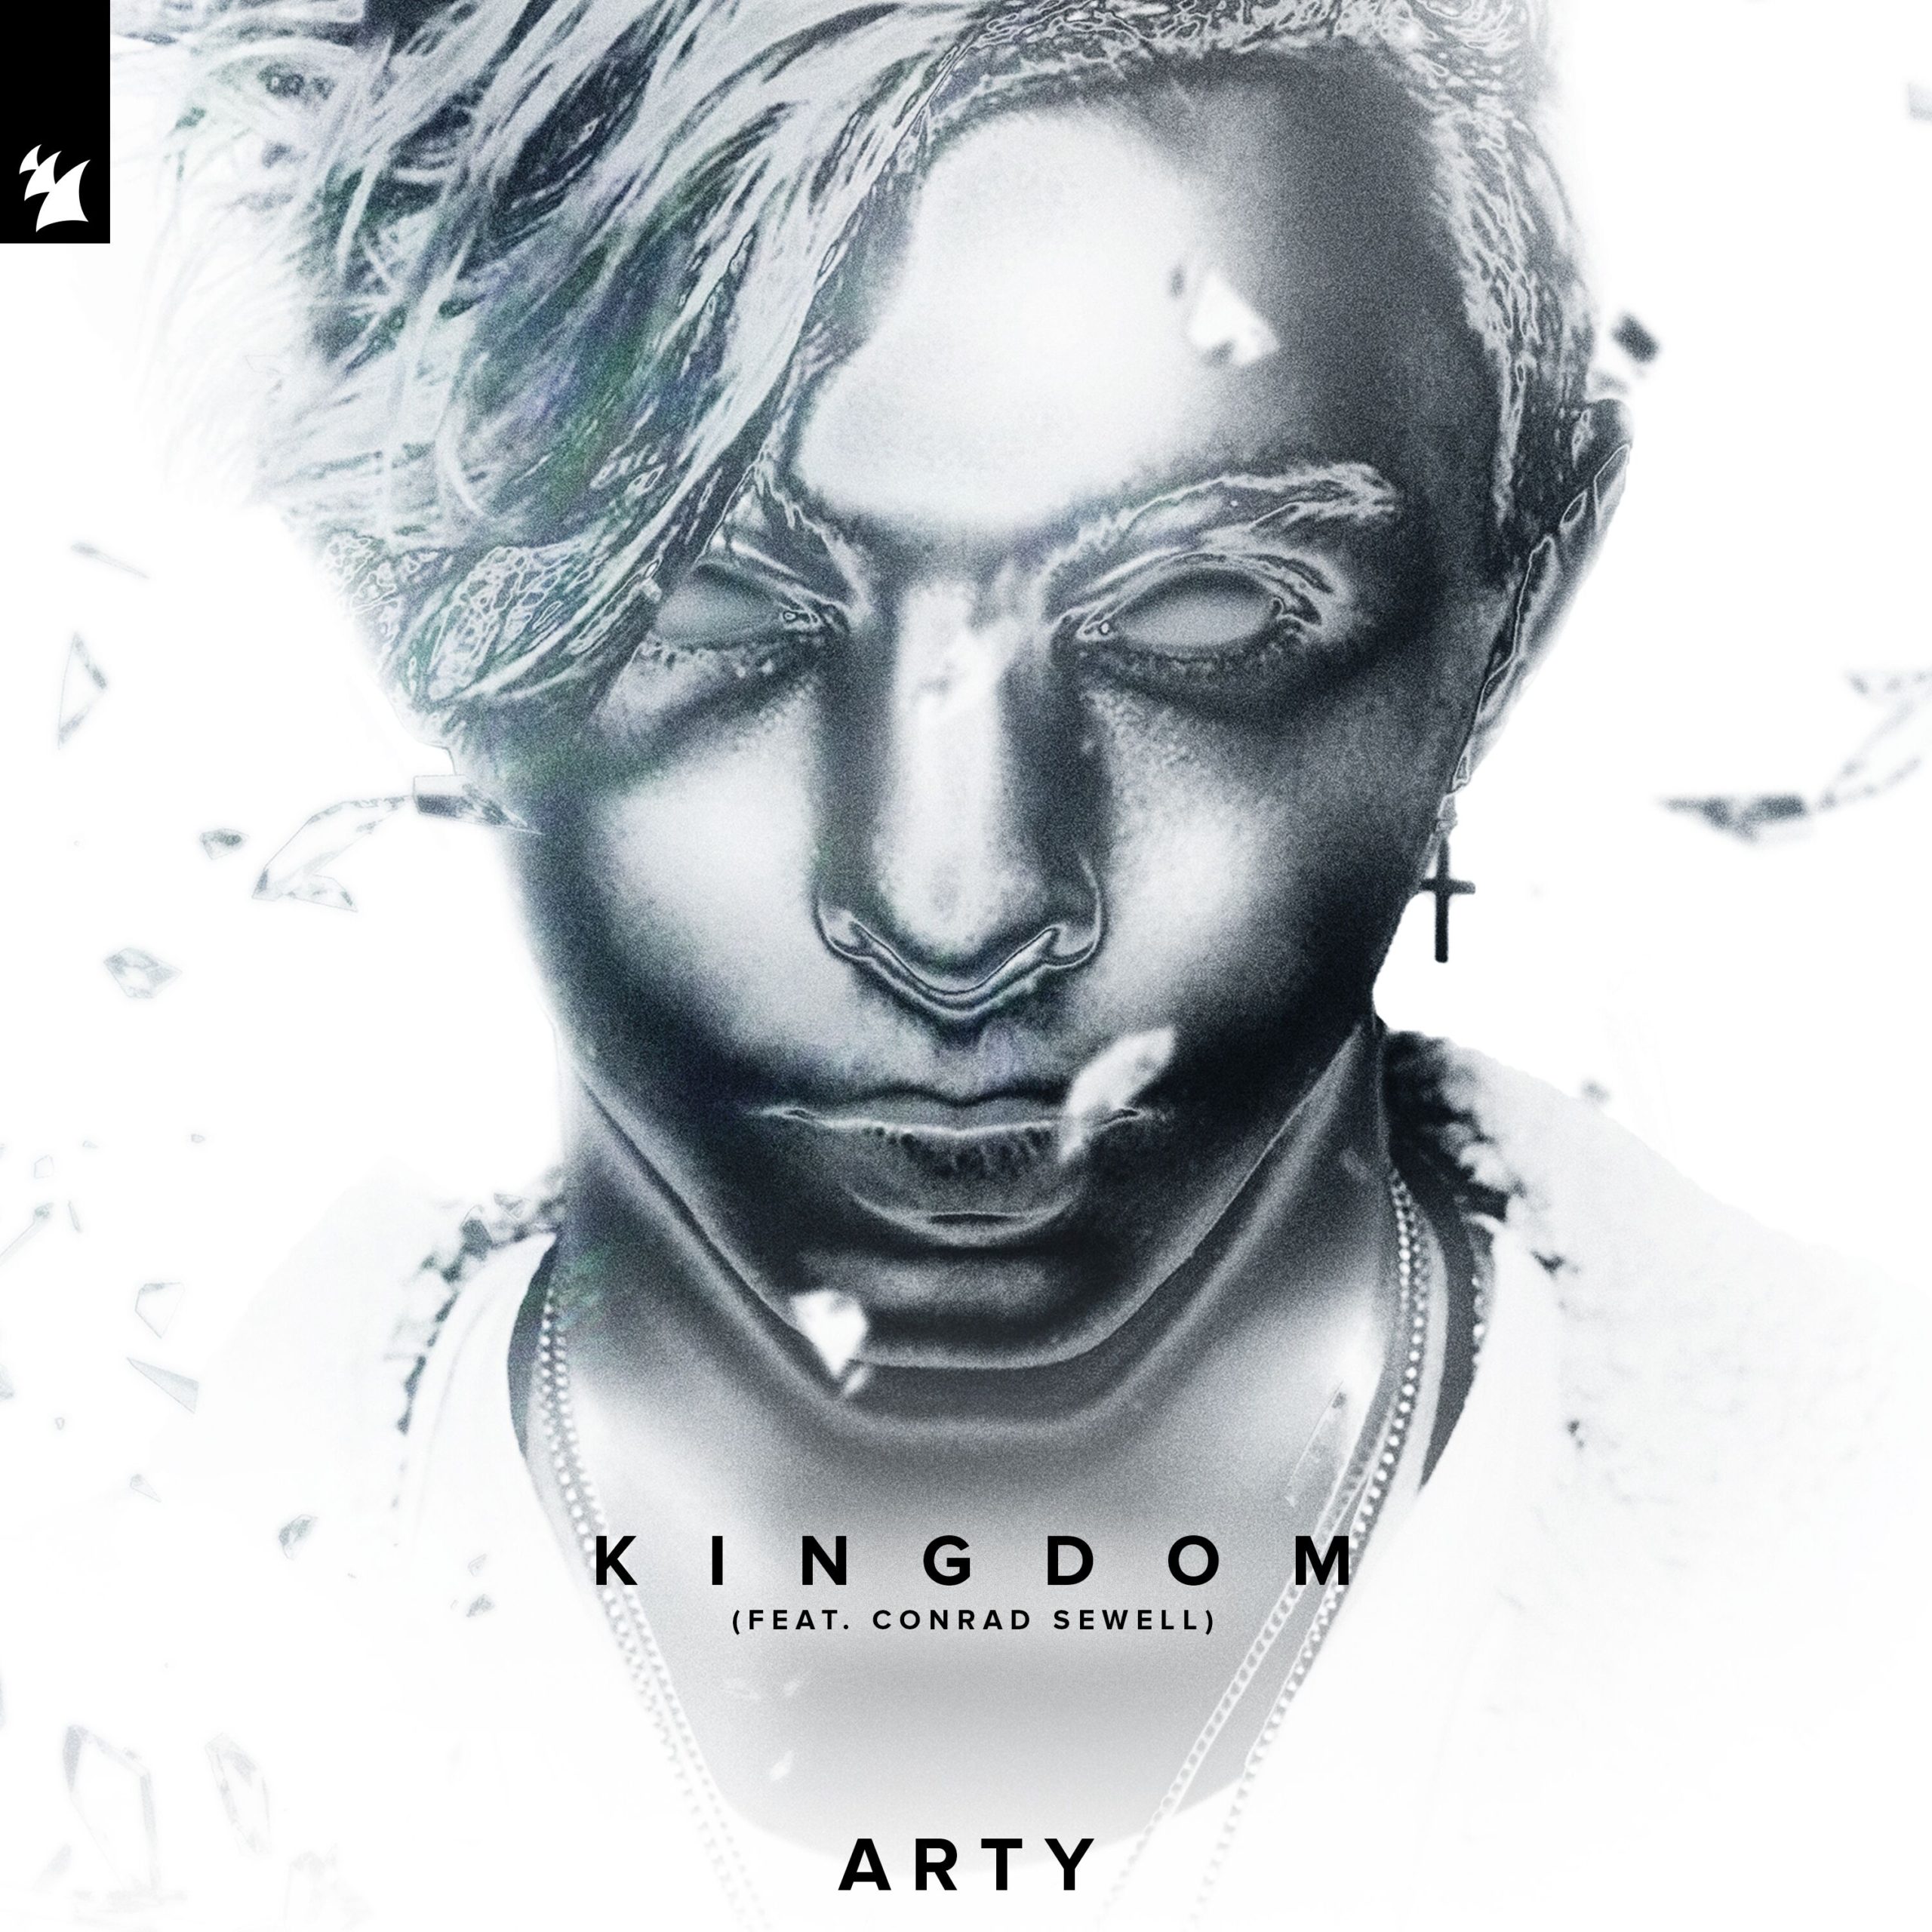 ARTY feat. Conrad Sewell presents Kingdom on Armada Music